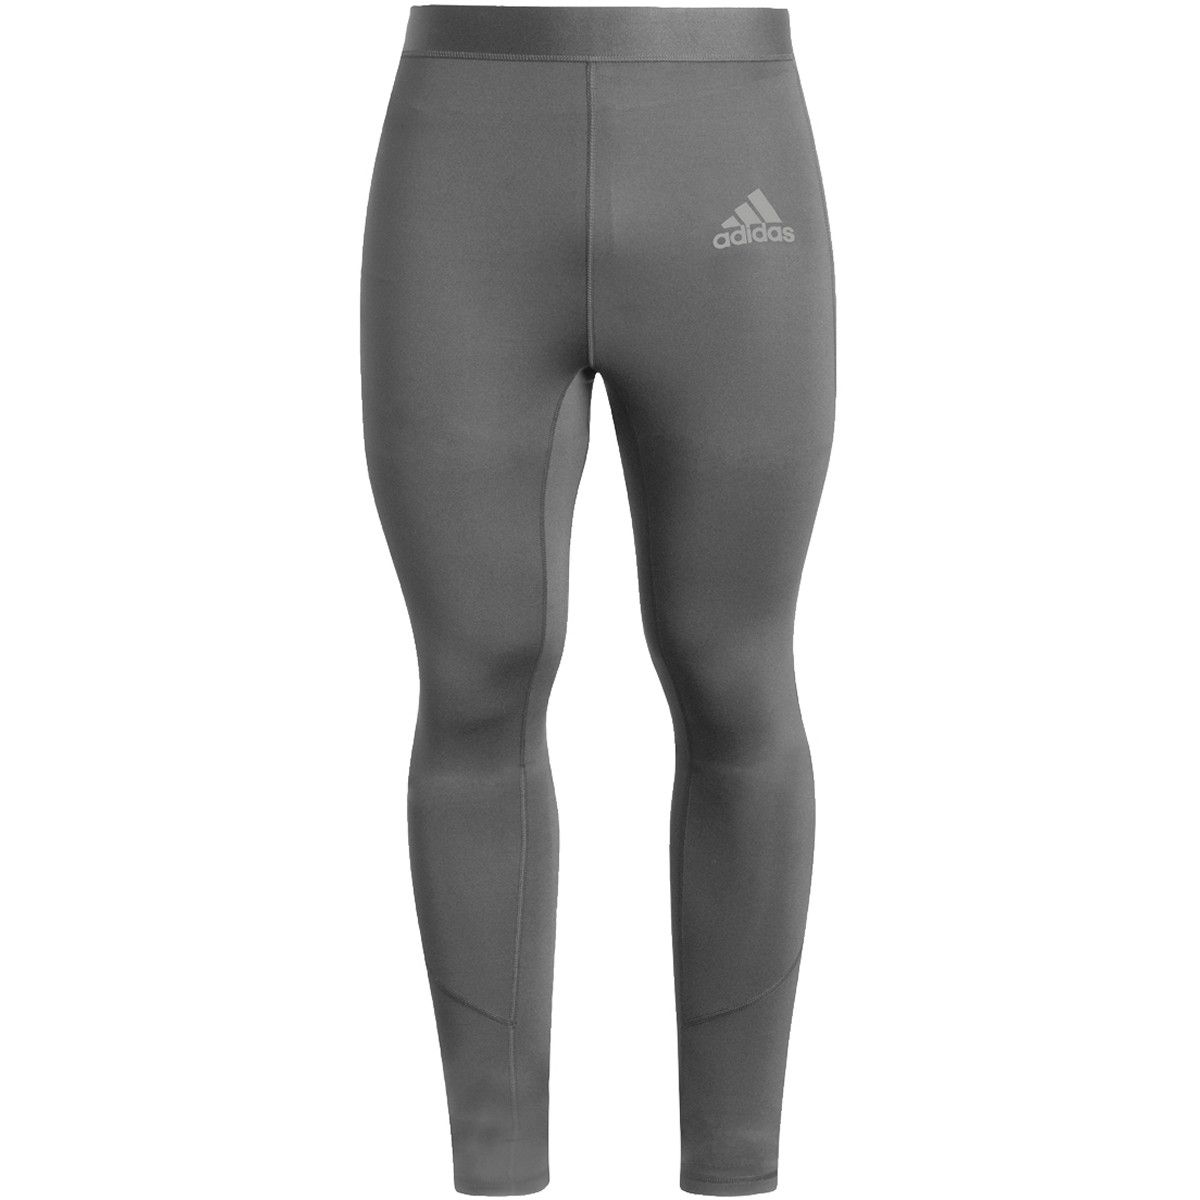 adidas Tech Fit Base Short Tight Pants - Black